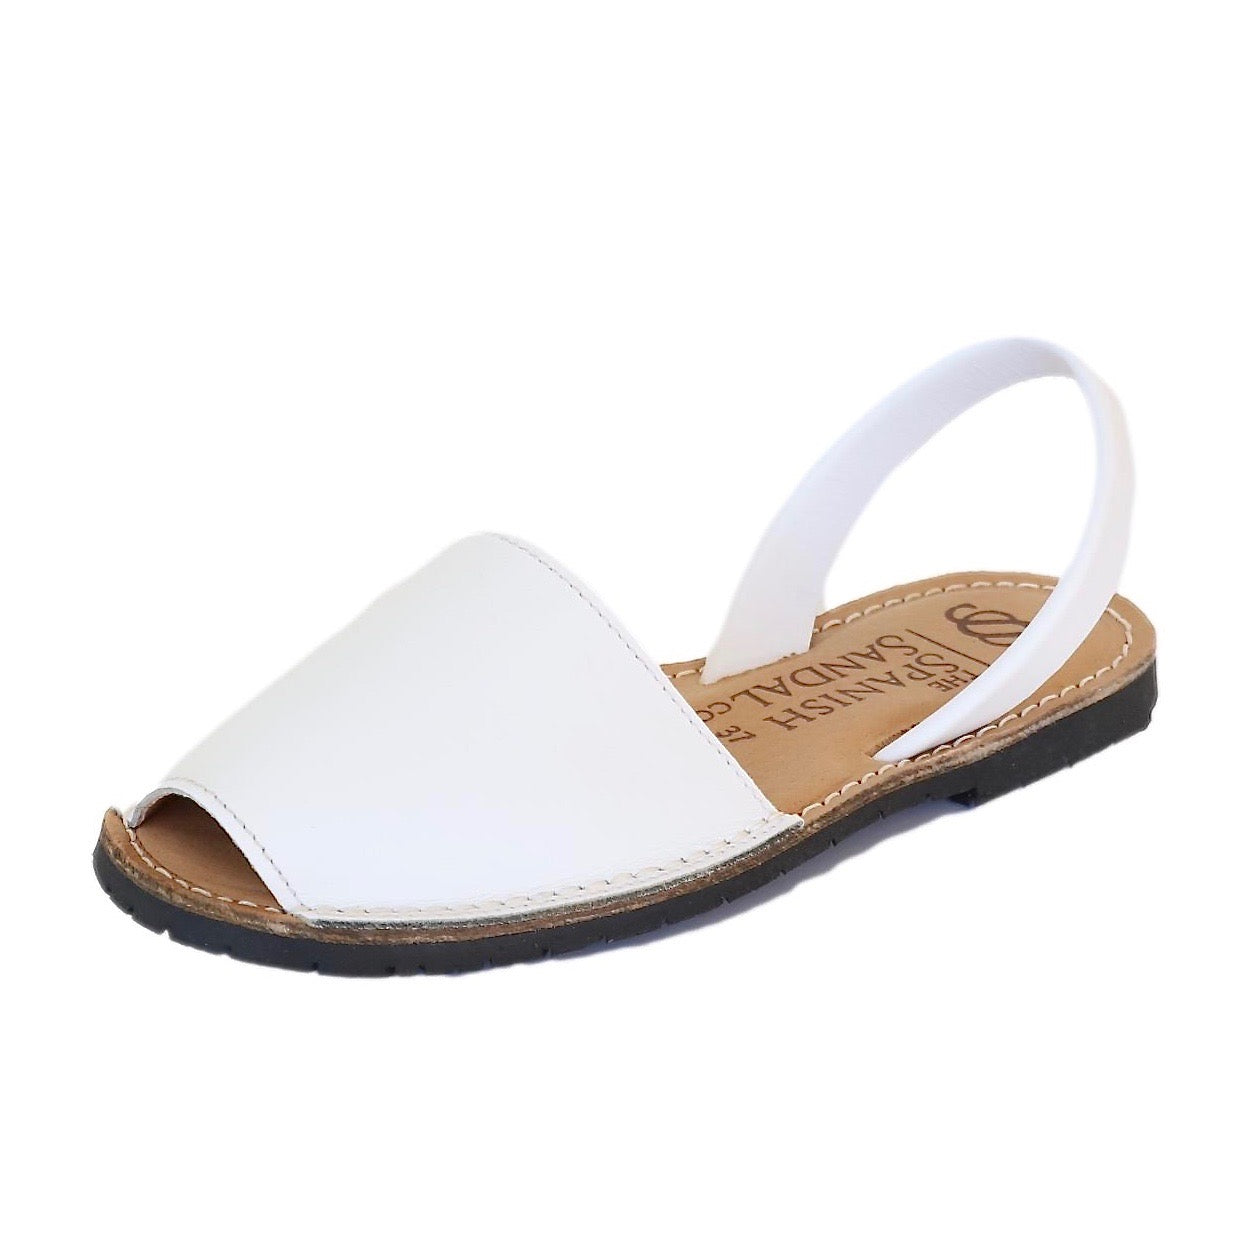 Classic White sandals